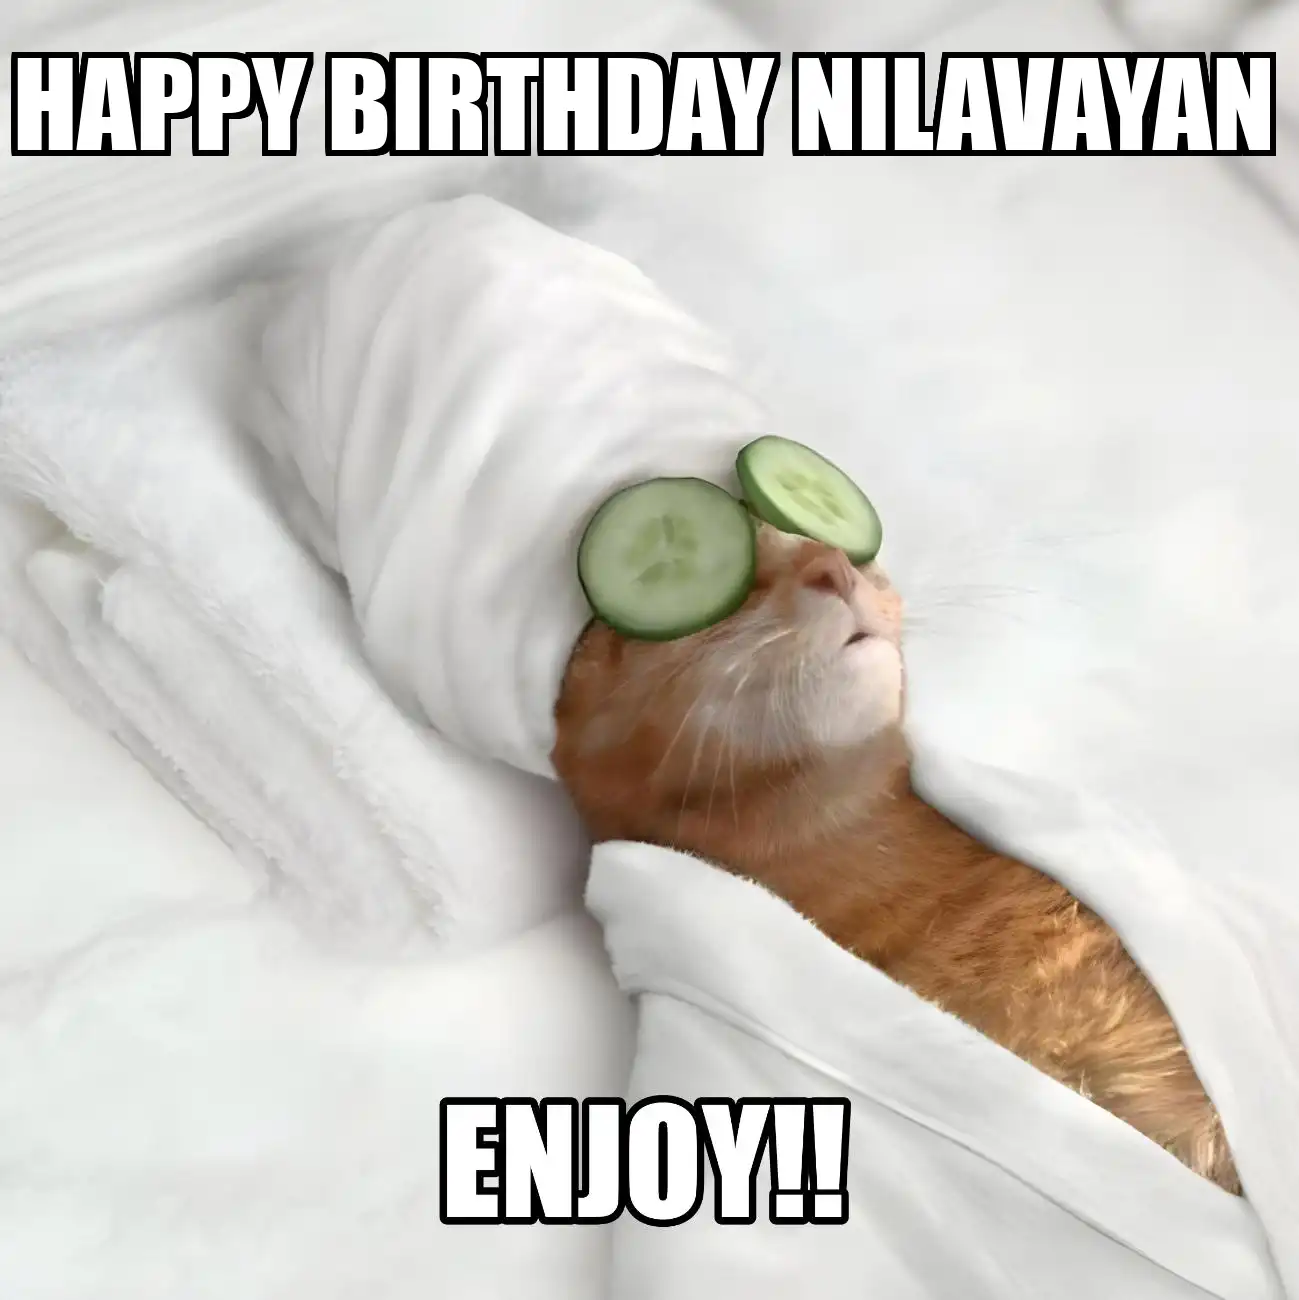 Happy Birthday Nilavayan Enjoy Cat Meme